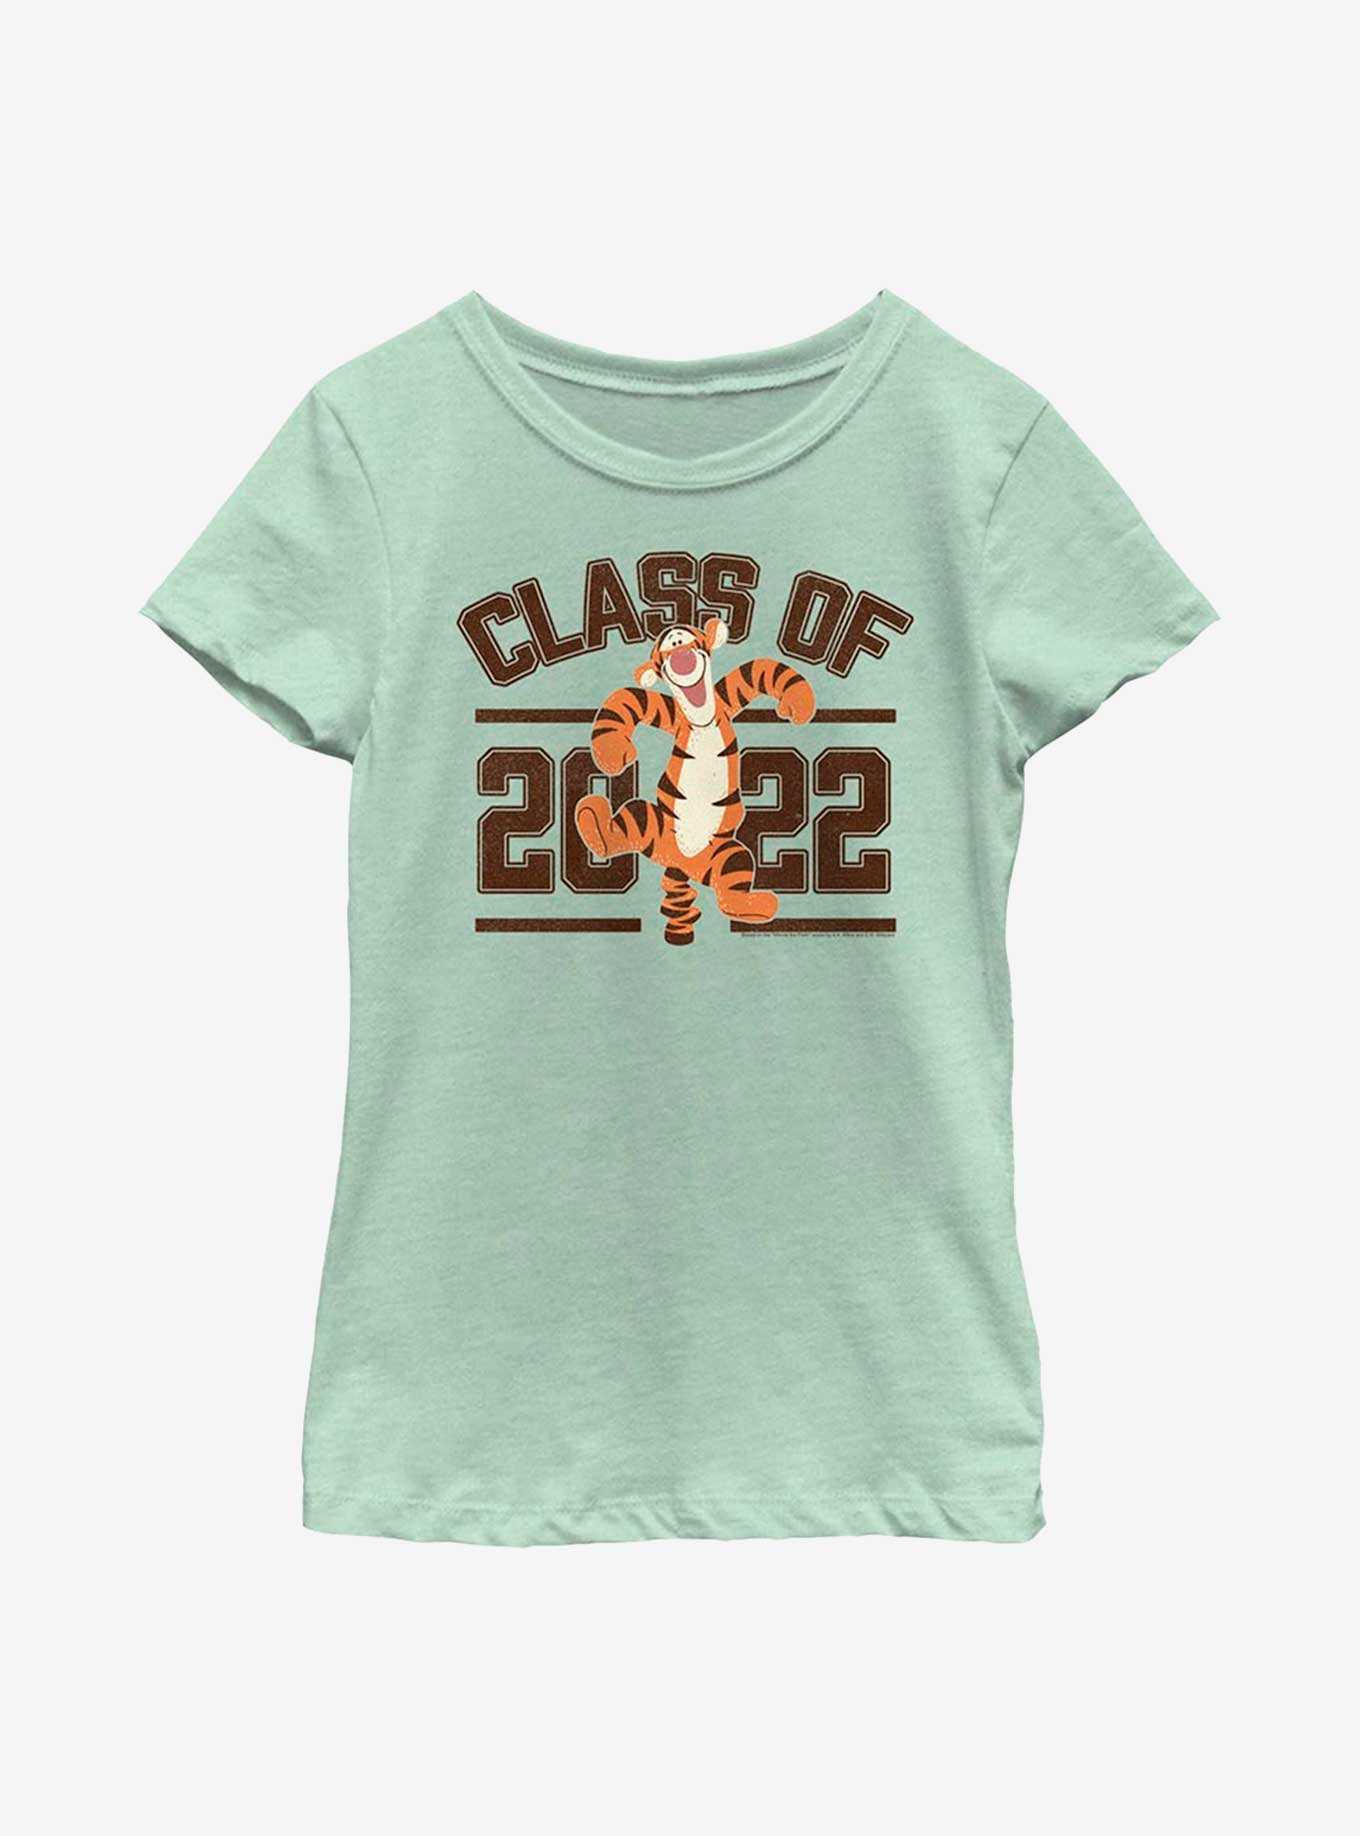 Disney Winnie The Pooh Tigger Class 2022 Youth Girls T-Shirt, , hi-res